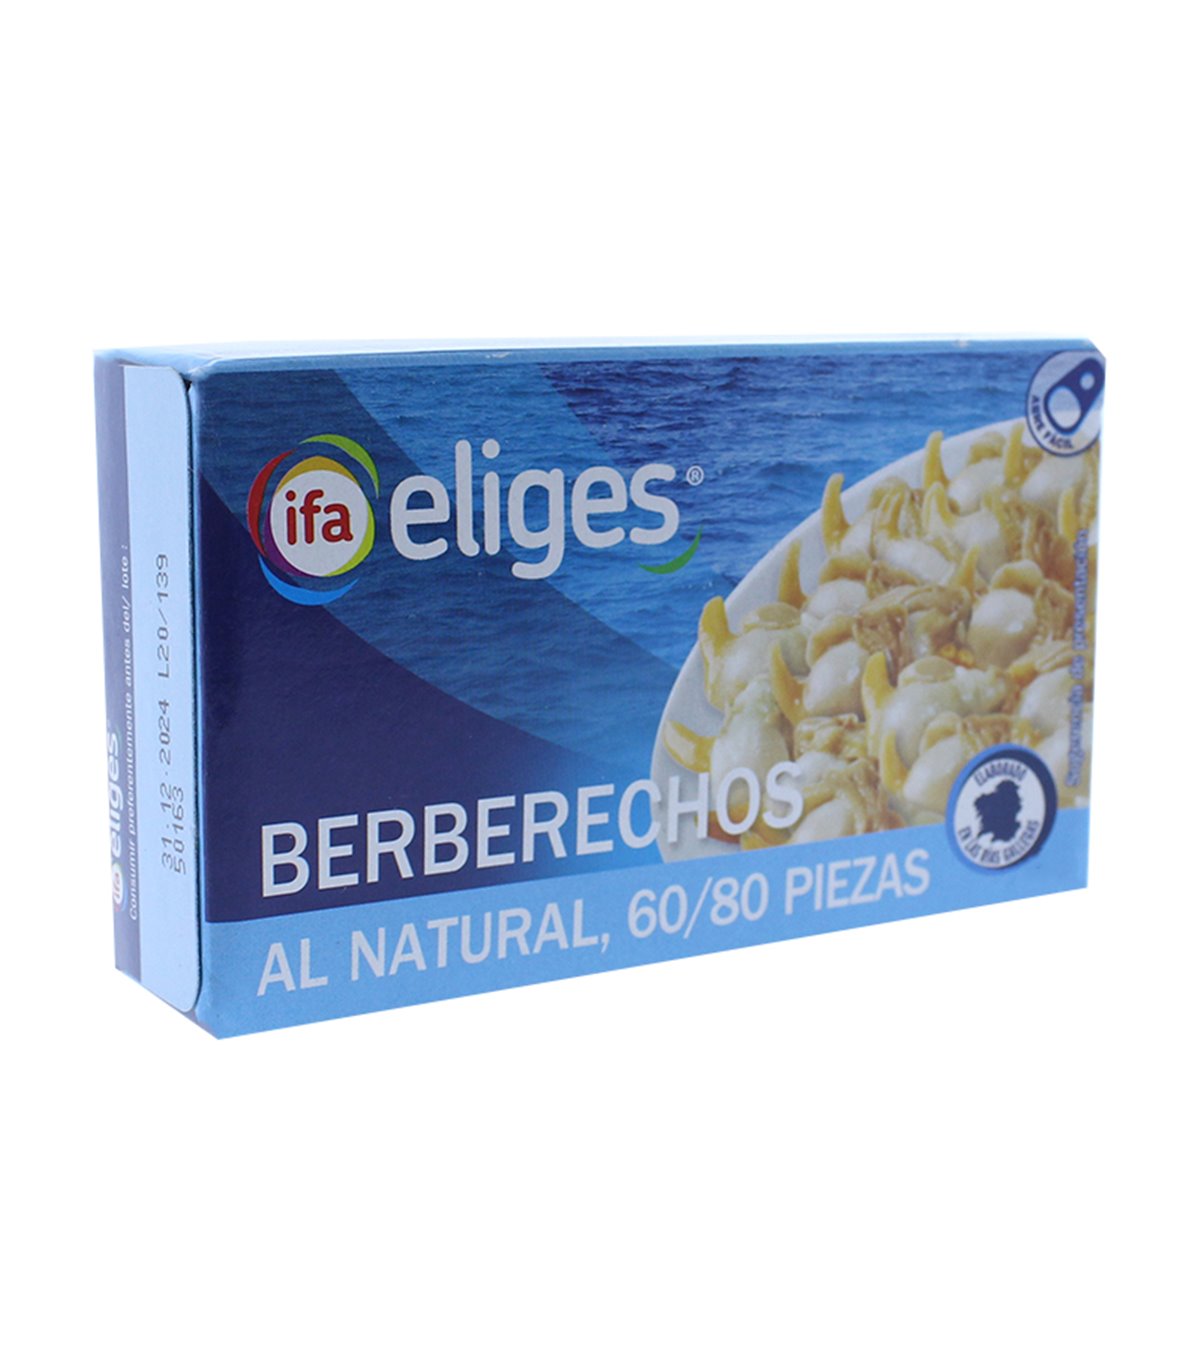 BERBERECHOS NATURAL IFA ELIGES 105g. 60/80